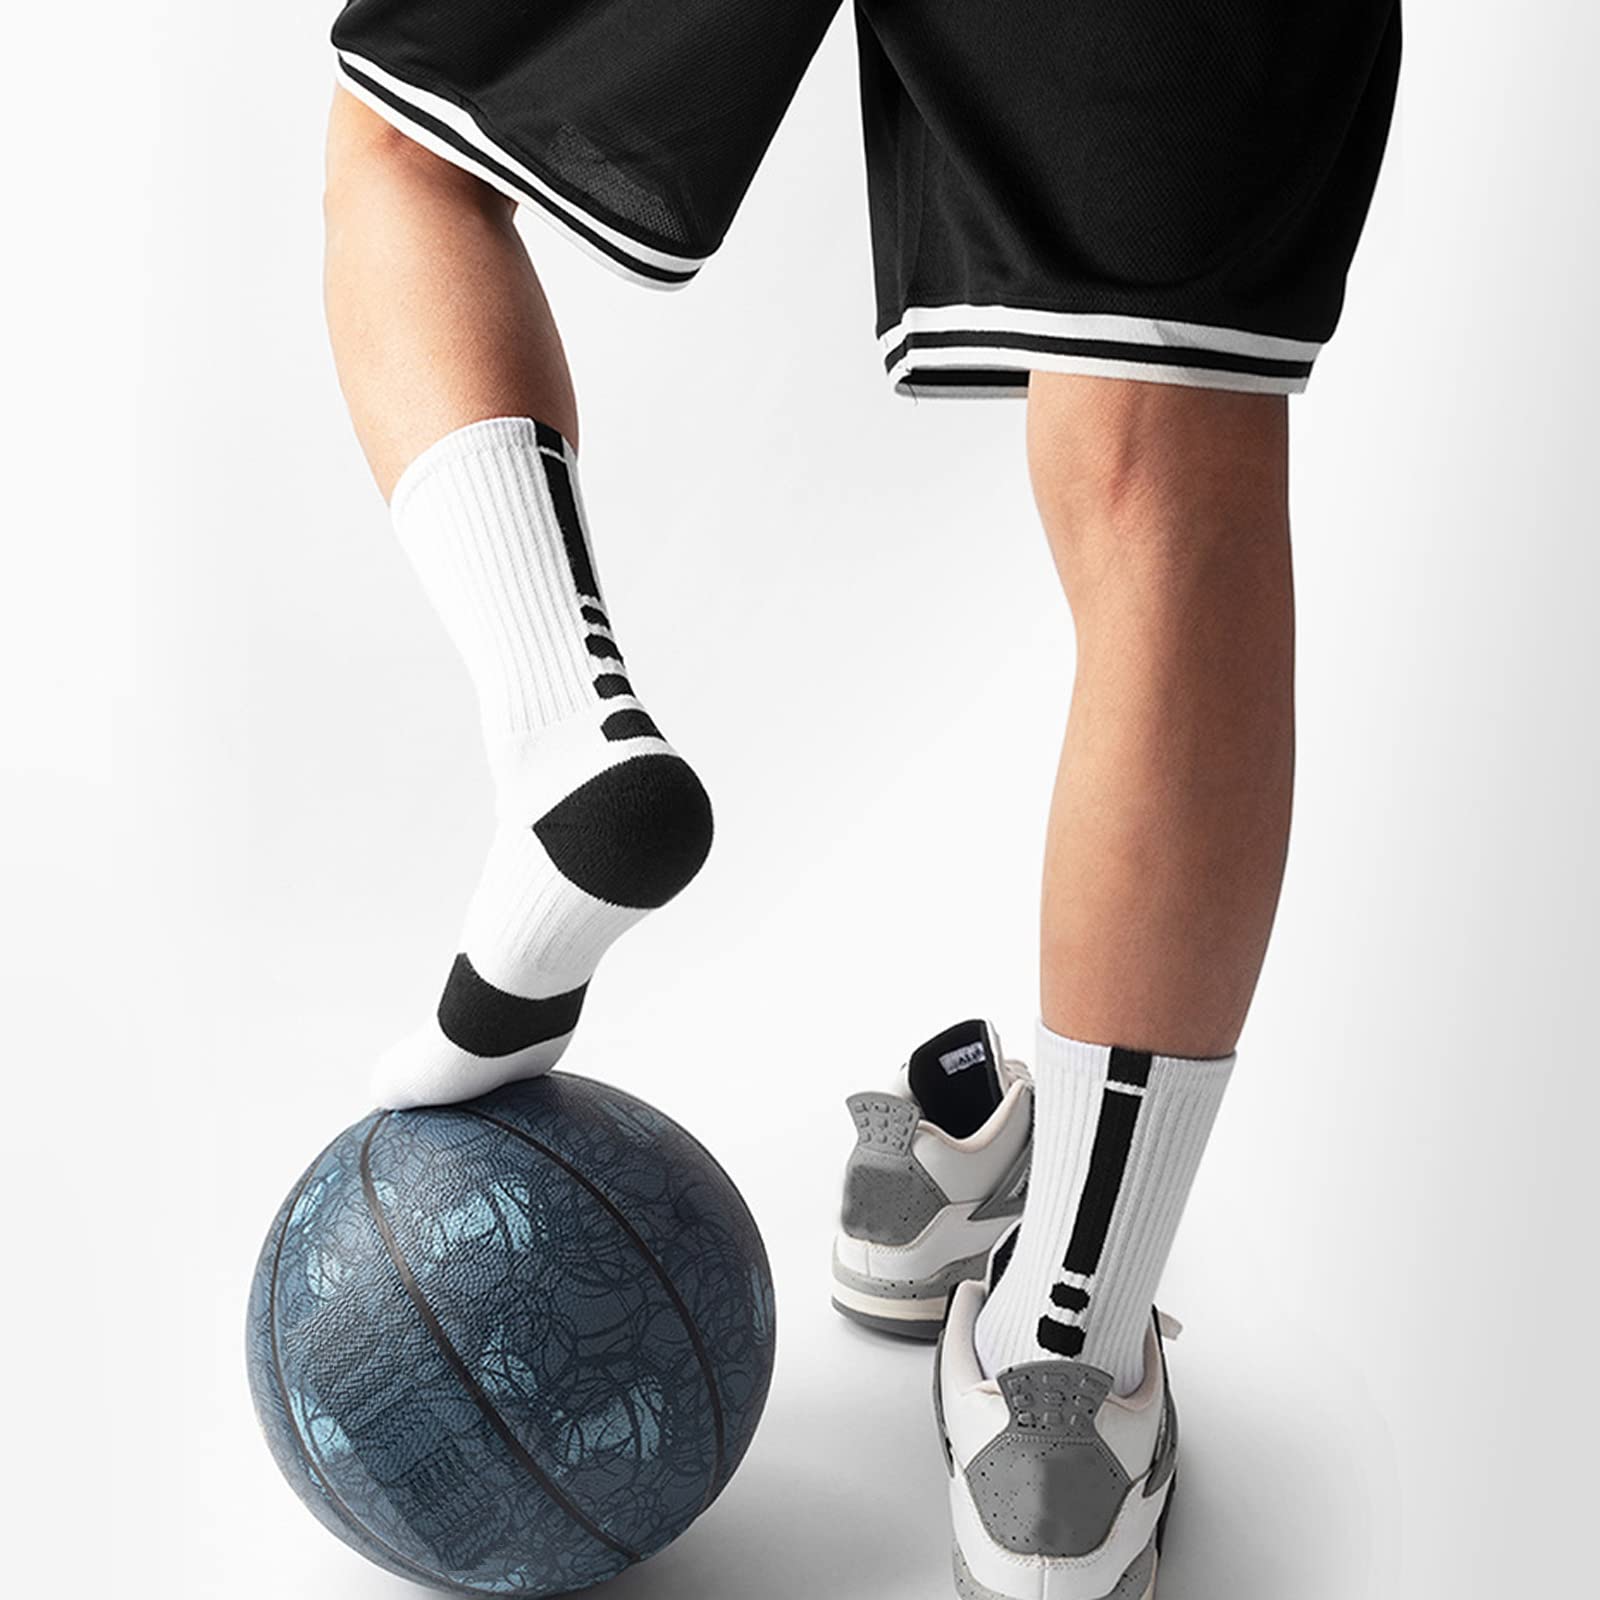 Fraobbg 4Pairs Men's Athletic Crew Socks Thick Protective Sport Cushion Elite Basketball Soccer Compression Towel Socks 7-12